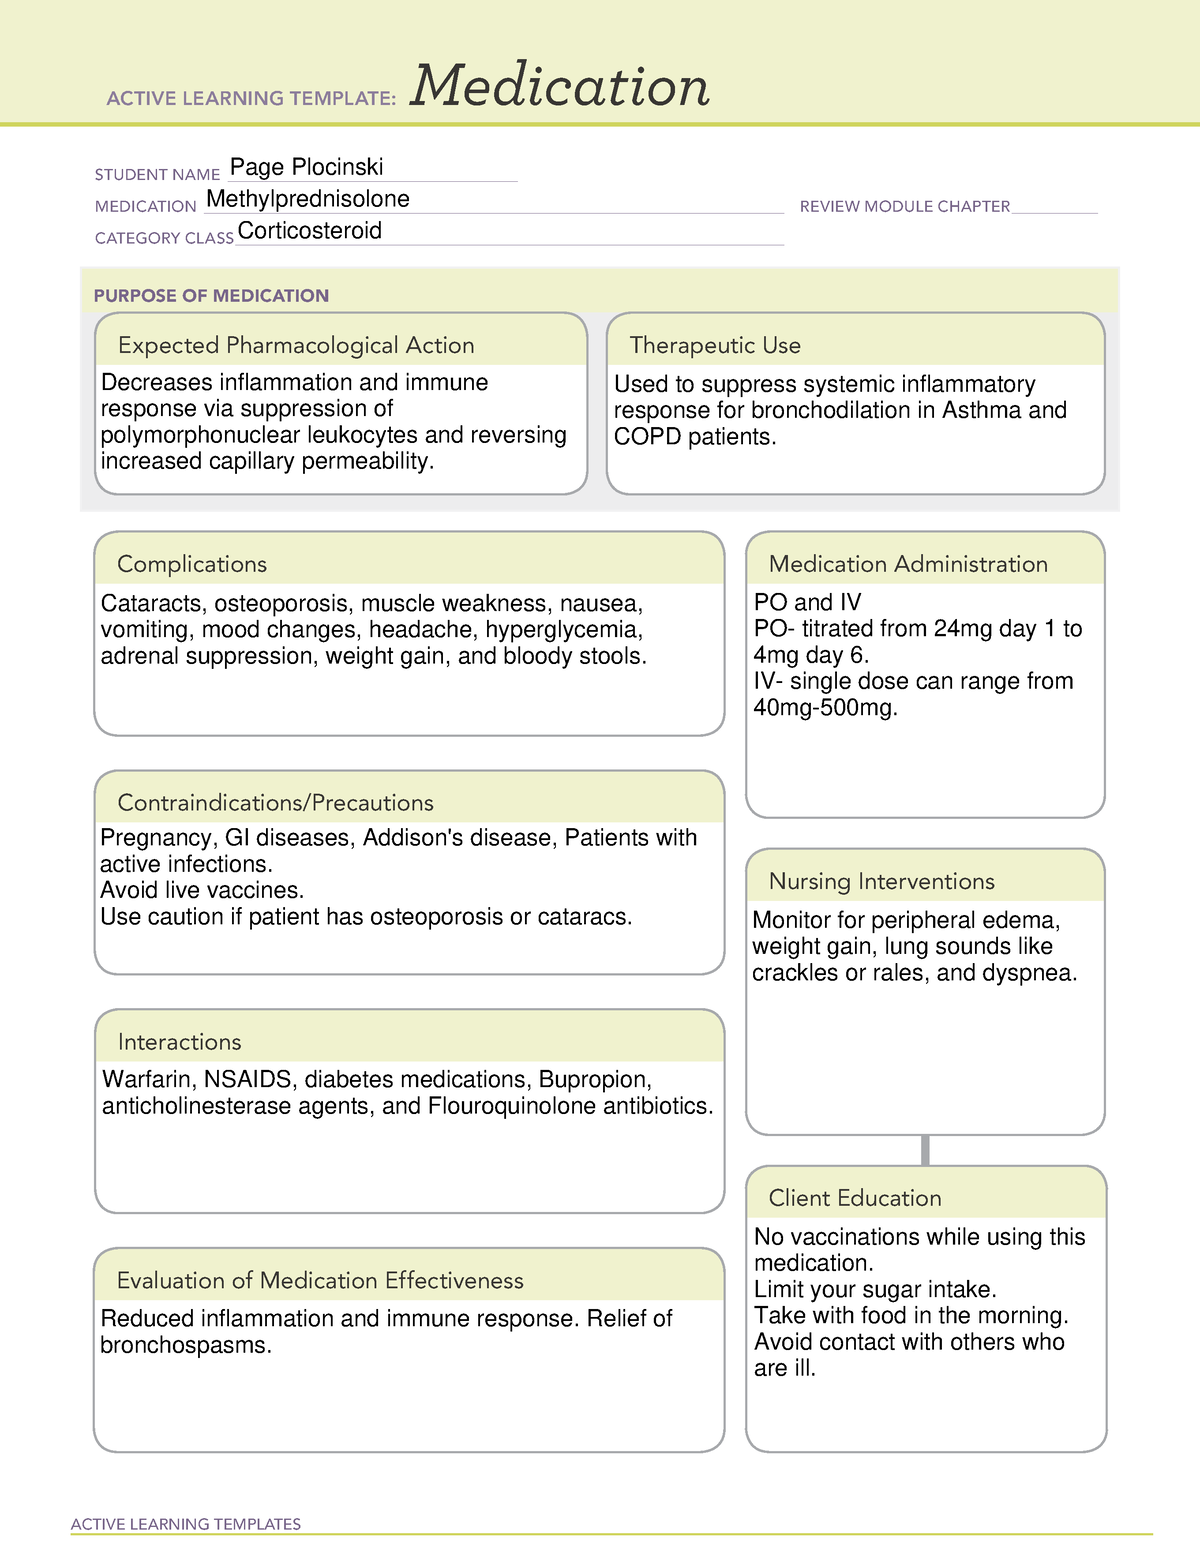 Methylprednisolone ATI sheet ACTIVE LEARNING TEMPLATES Medication